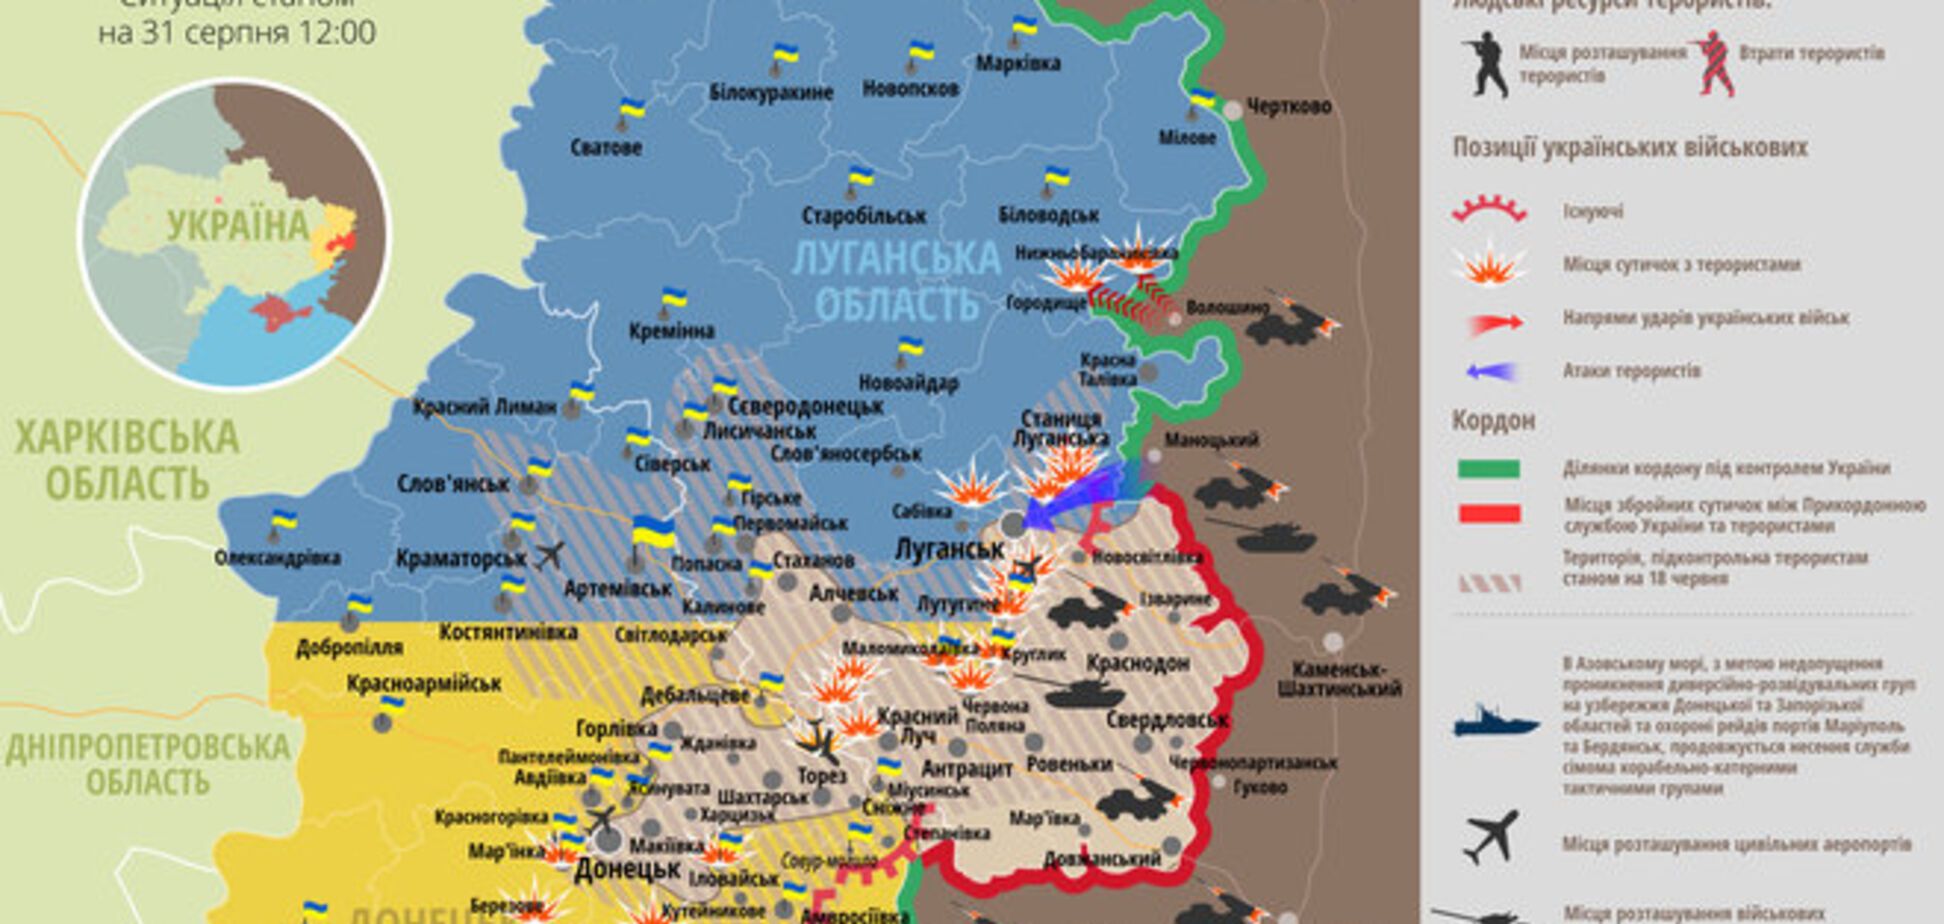 Опубликована карта боевых действий в зоне АТО за 31 августа